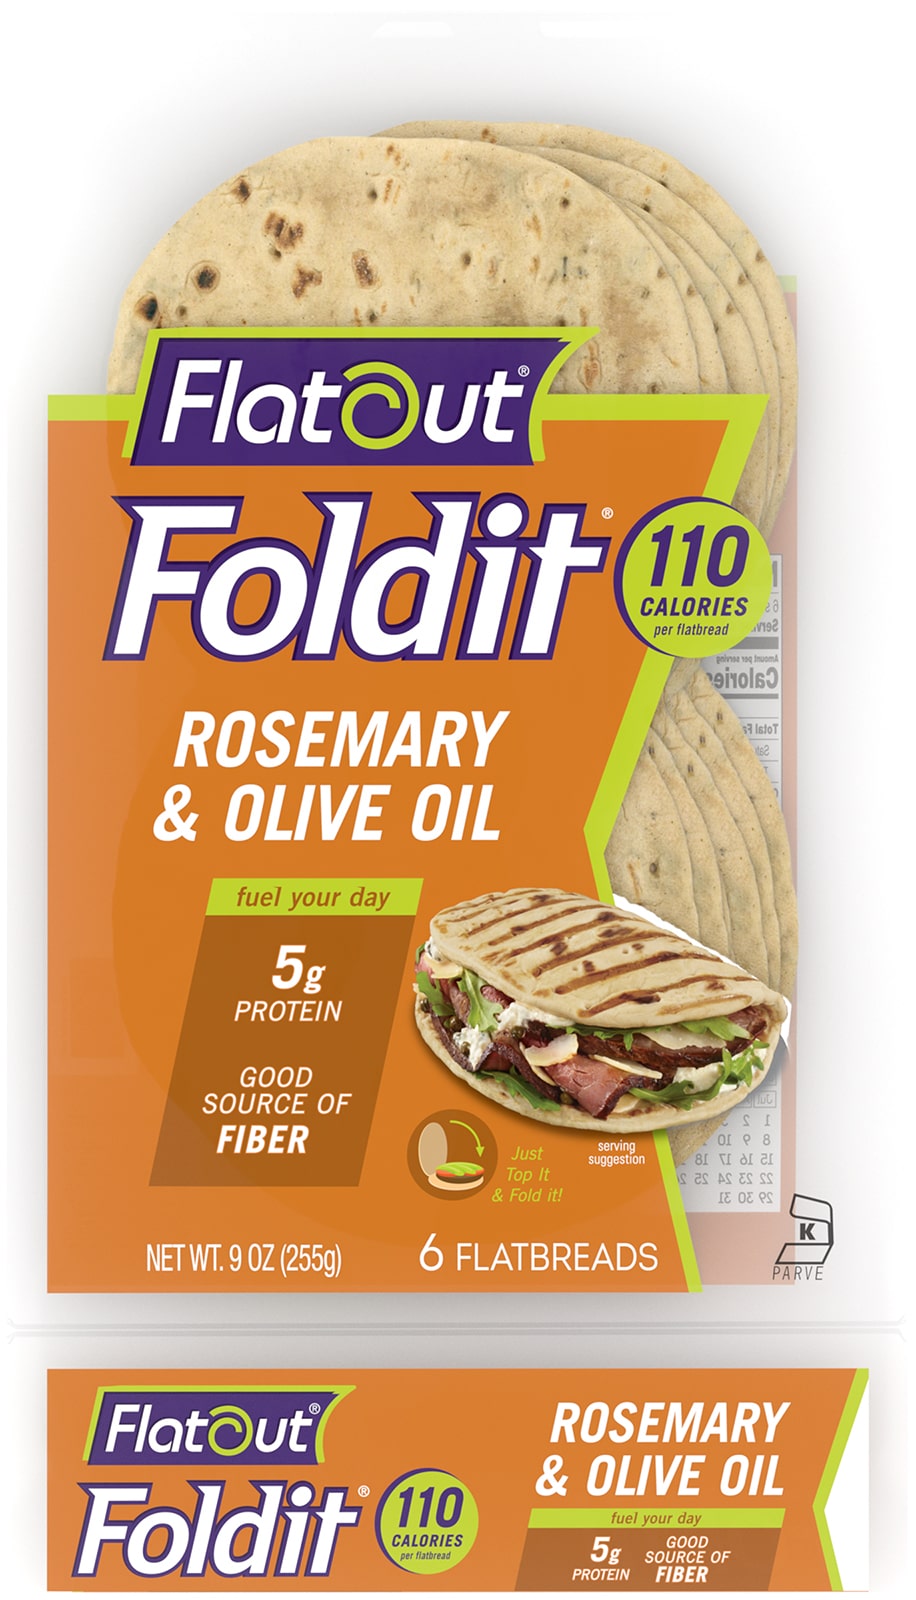 Flatout® Foldit Rosemary & Olive Oil Flatbread